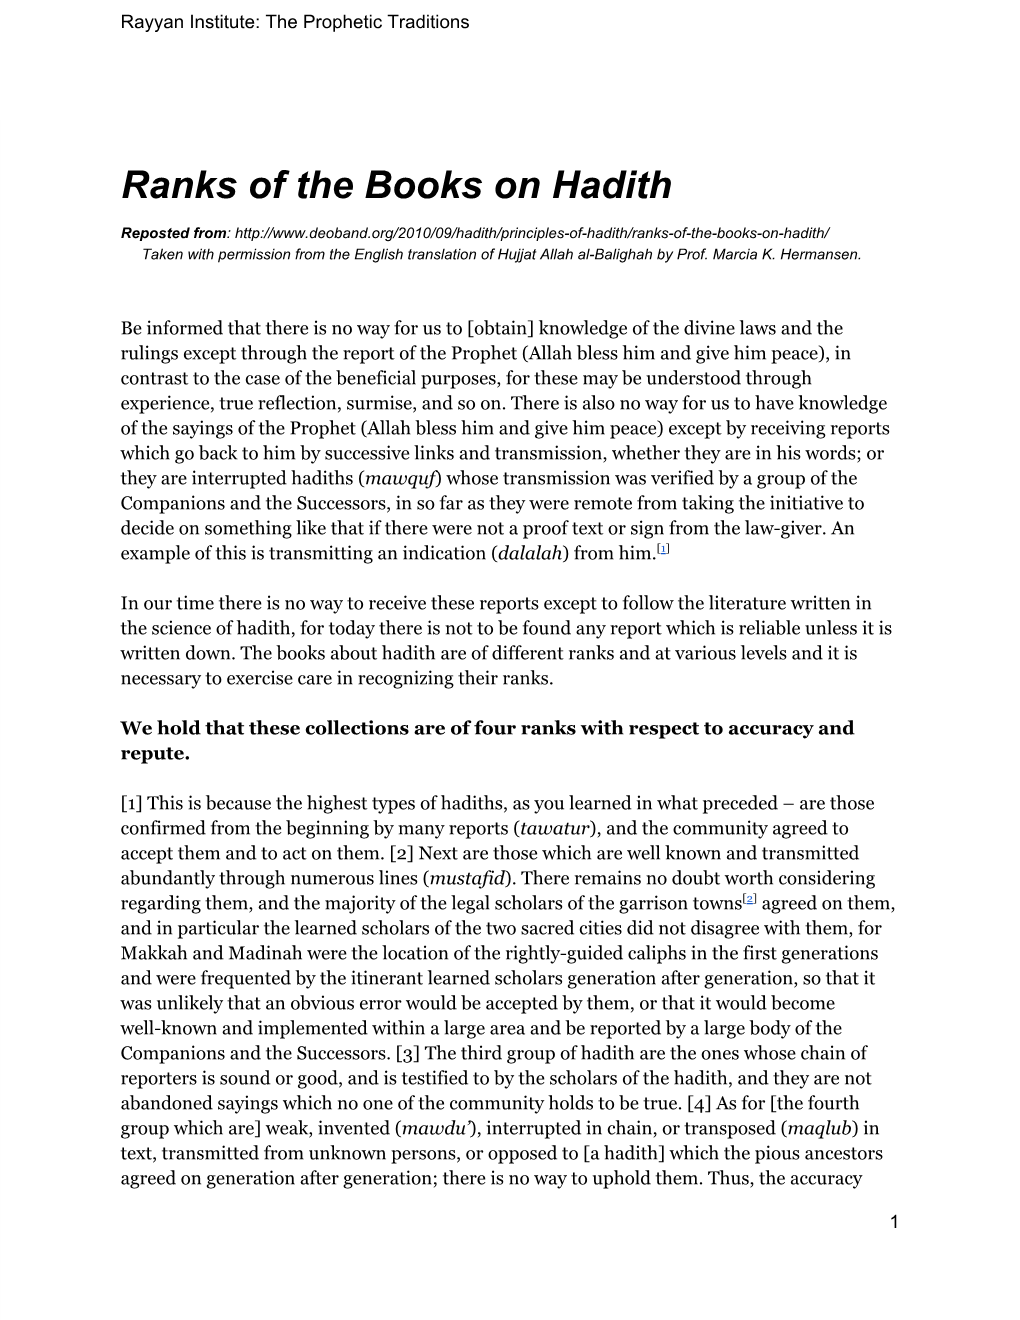 Ranks of the Books on Hadith